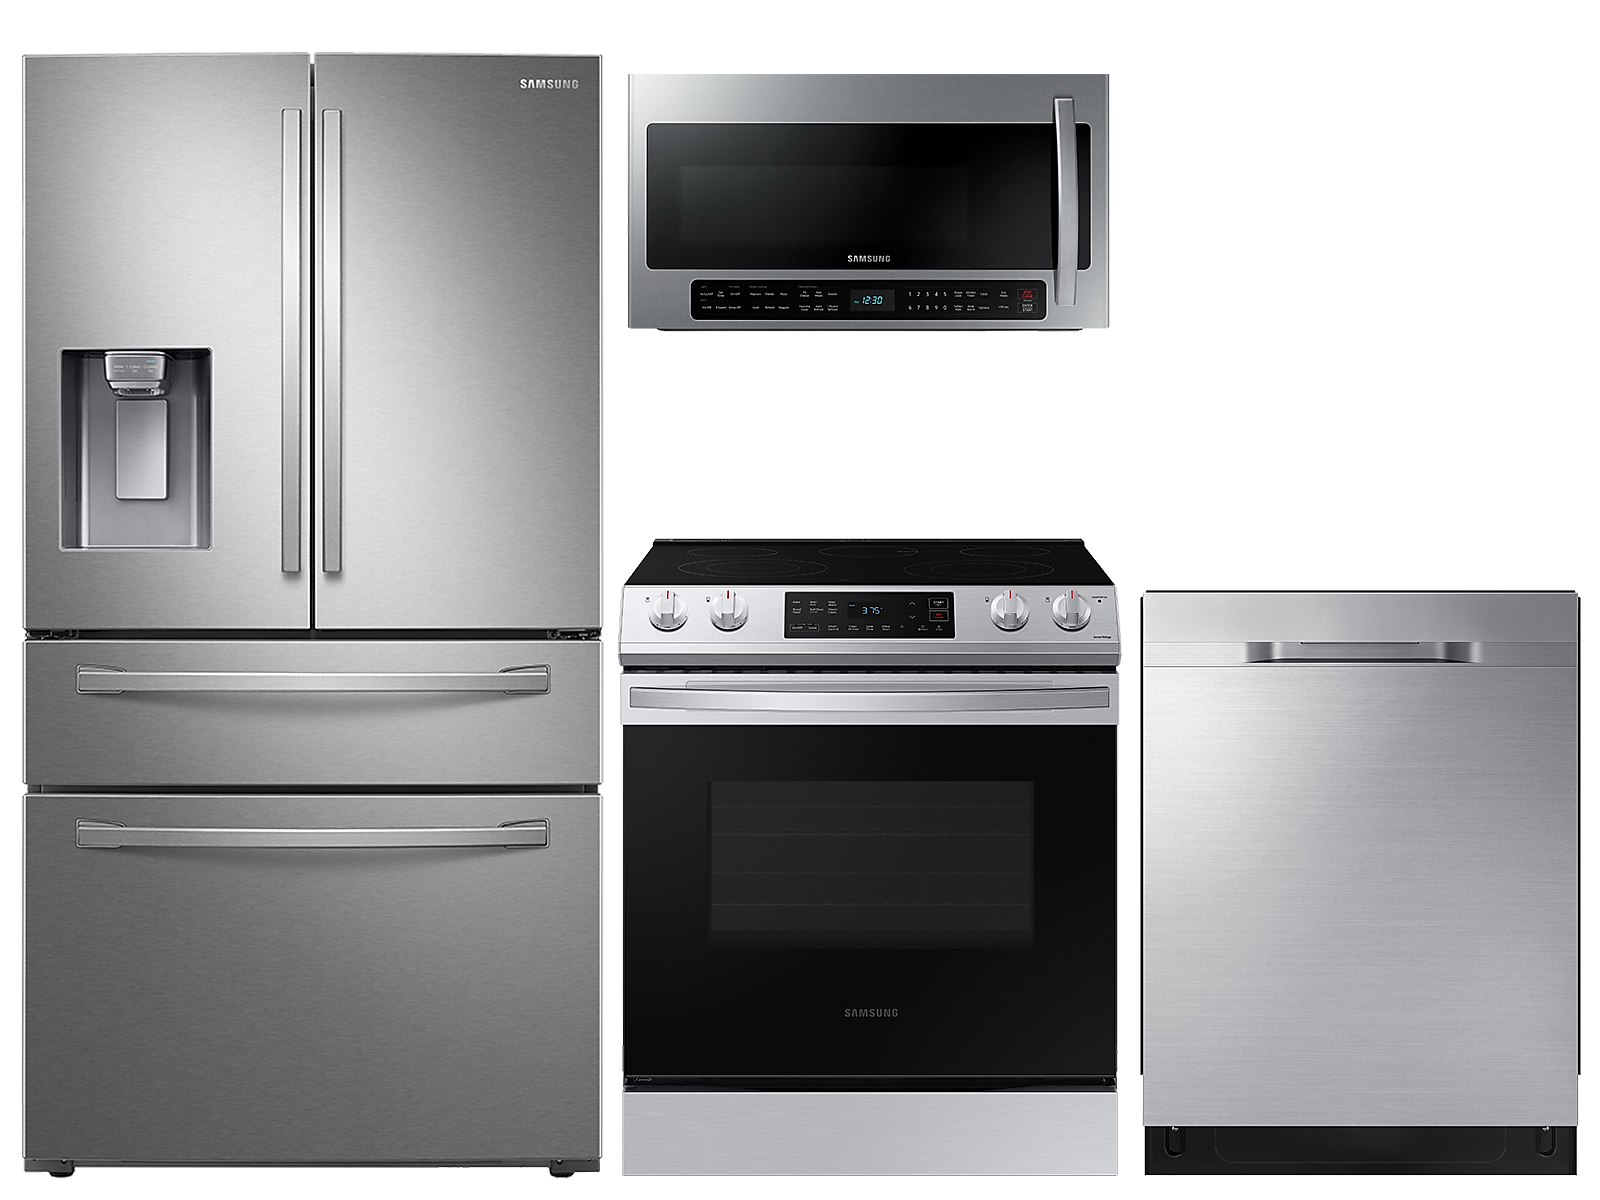 Samsung 28 cu. ft. 4-door refrigerator, 6.3 cu. ft. electric range, 2.1 cu. ft. microwave and 48 dBA dishwasher package(BNDL-1613507824747)